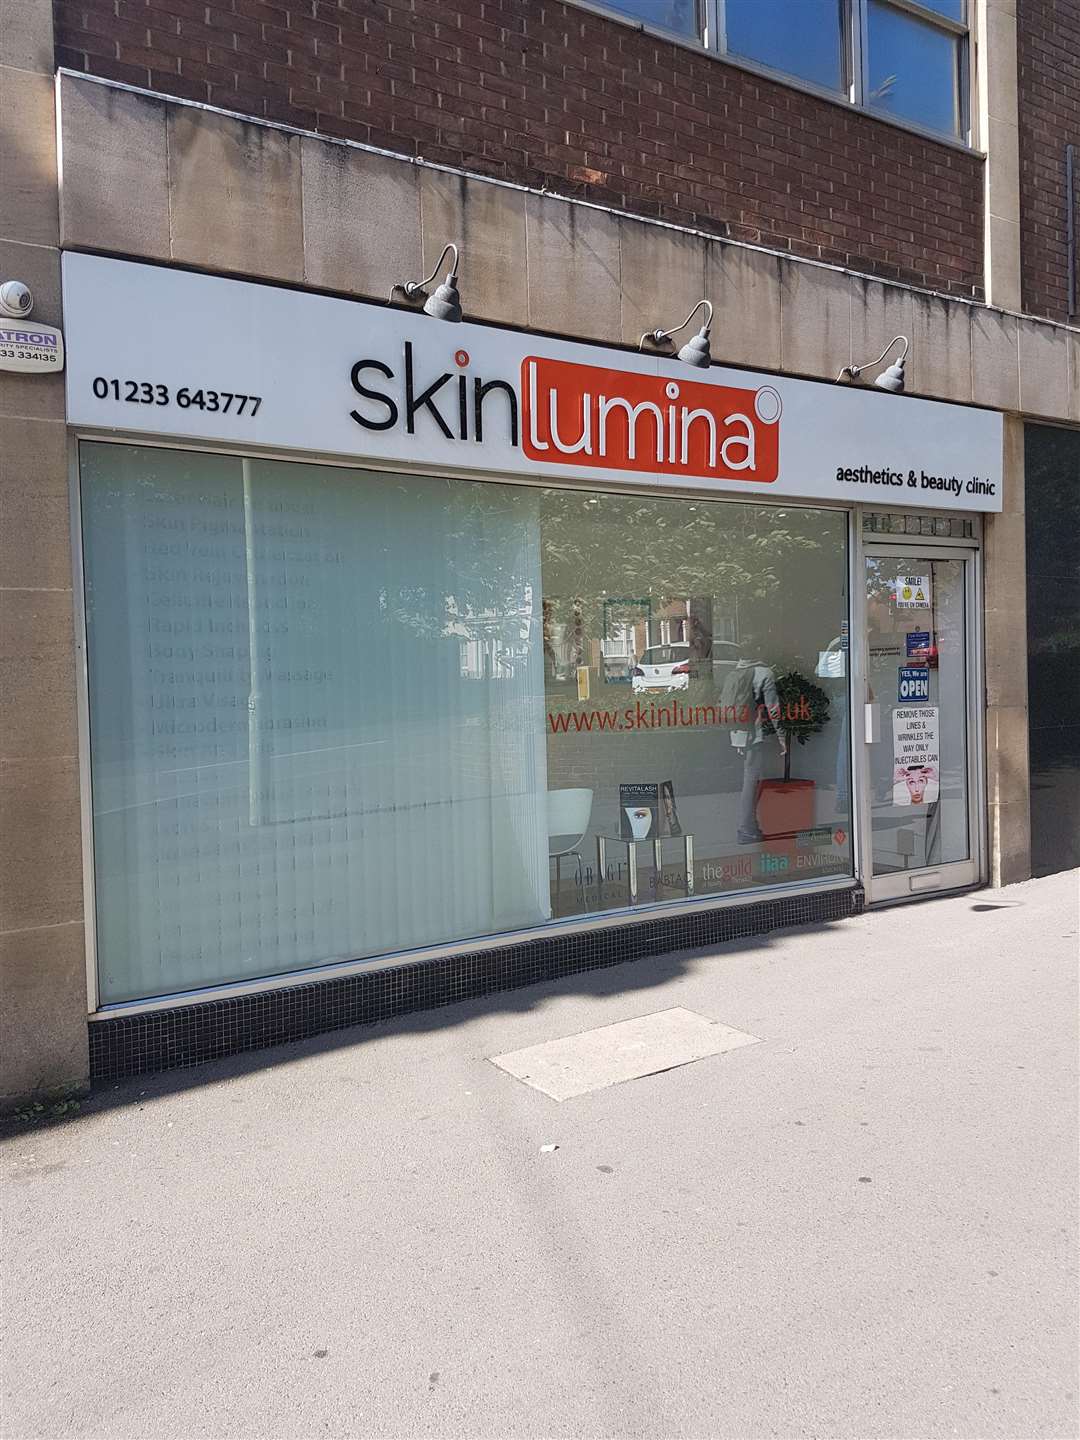 Skin Lumina in Ashford was broken into